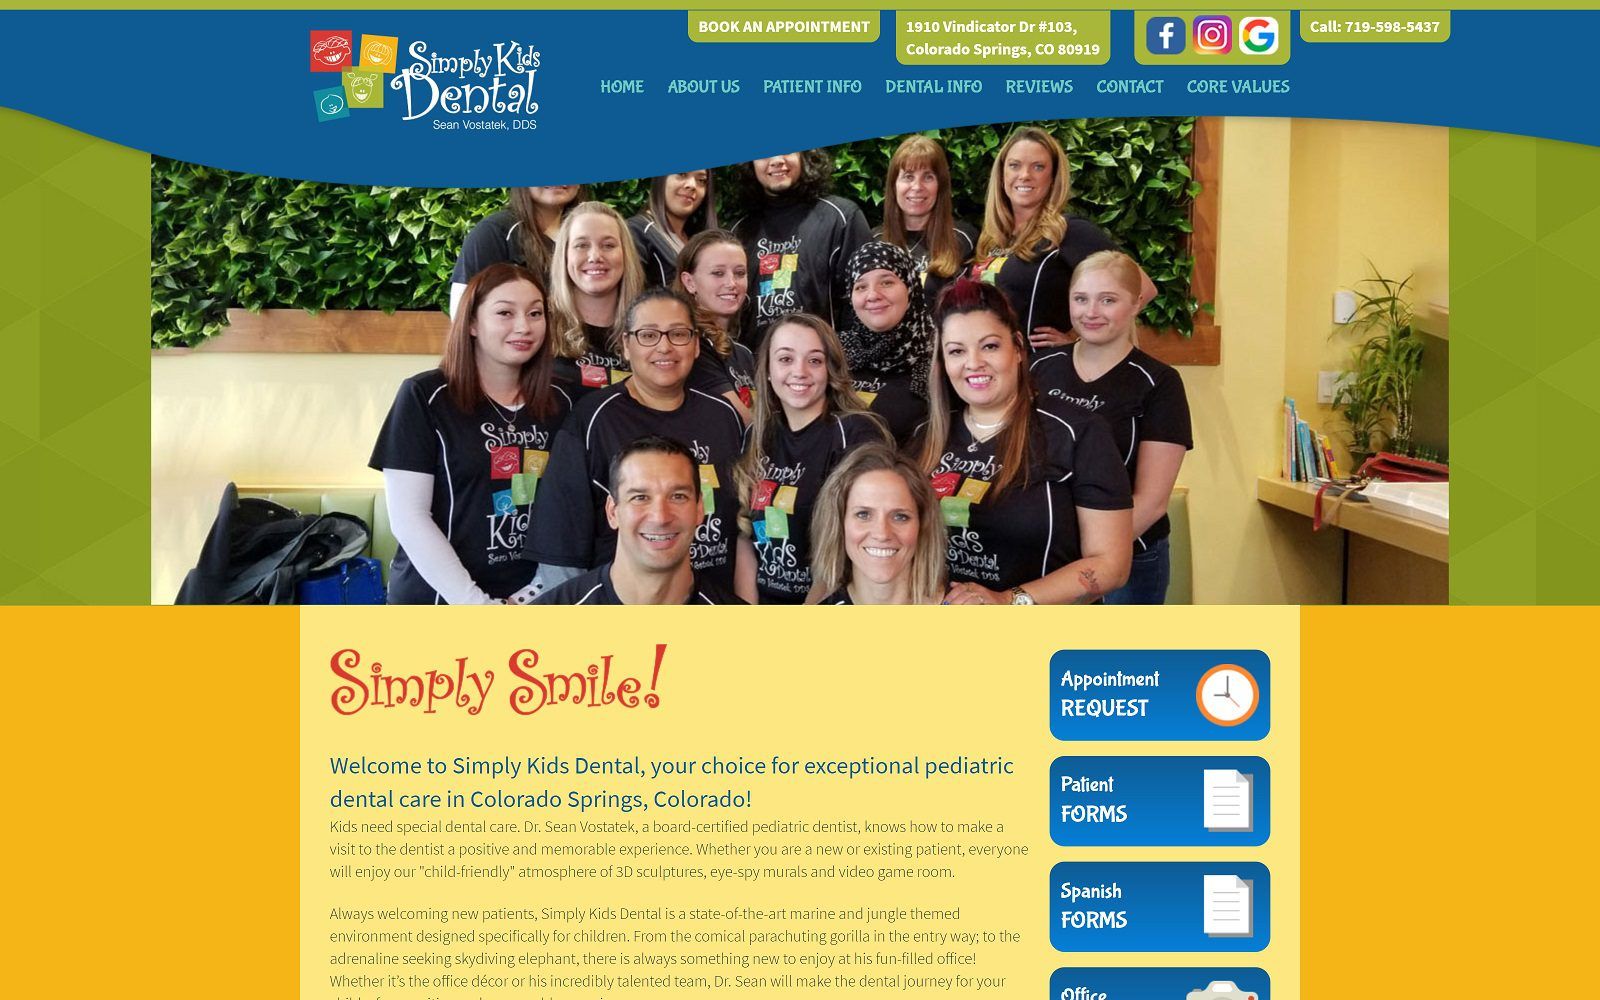 The screenshot of simply kids dental dr. Sean vostatek website